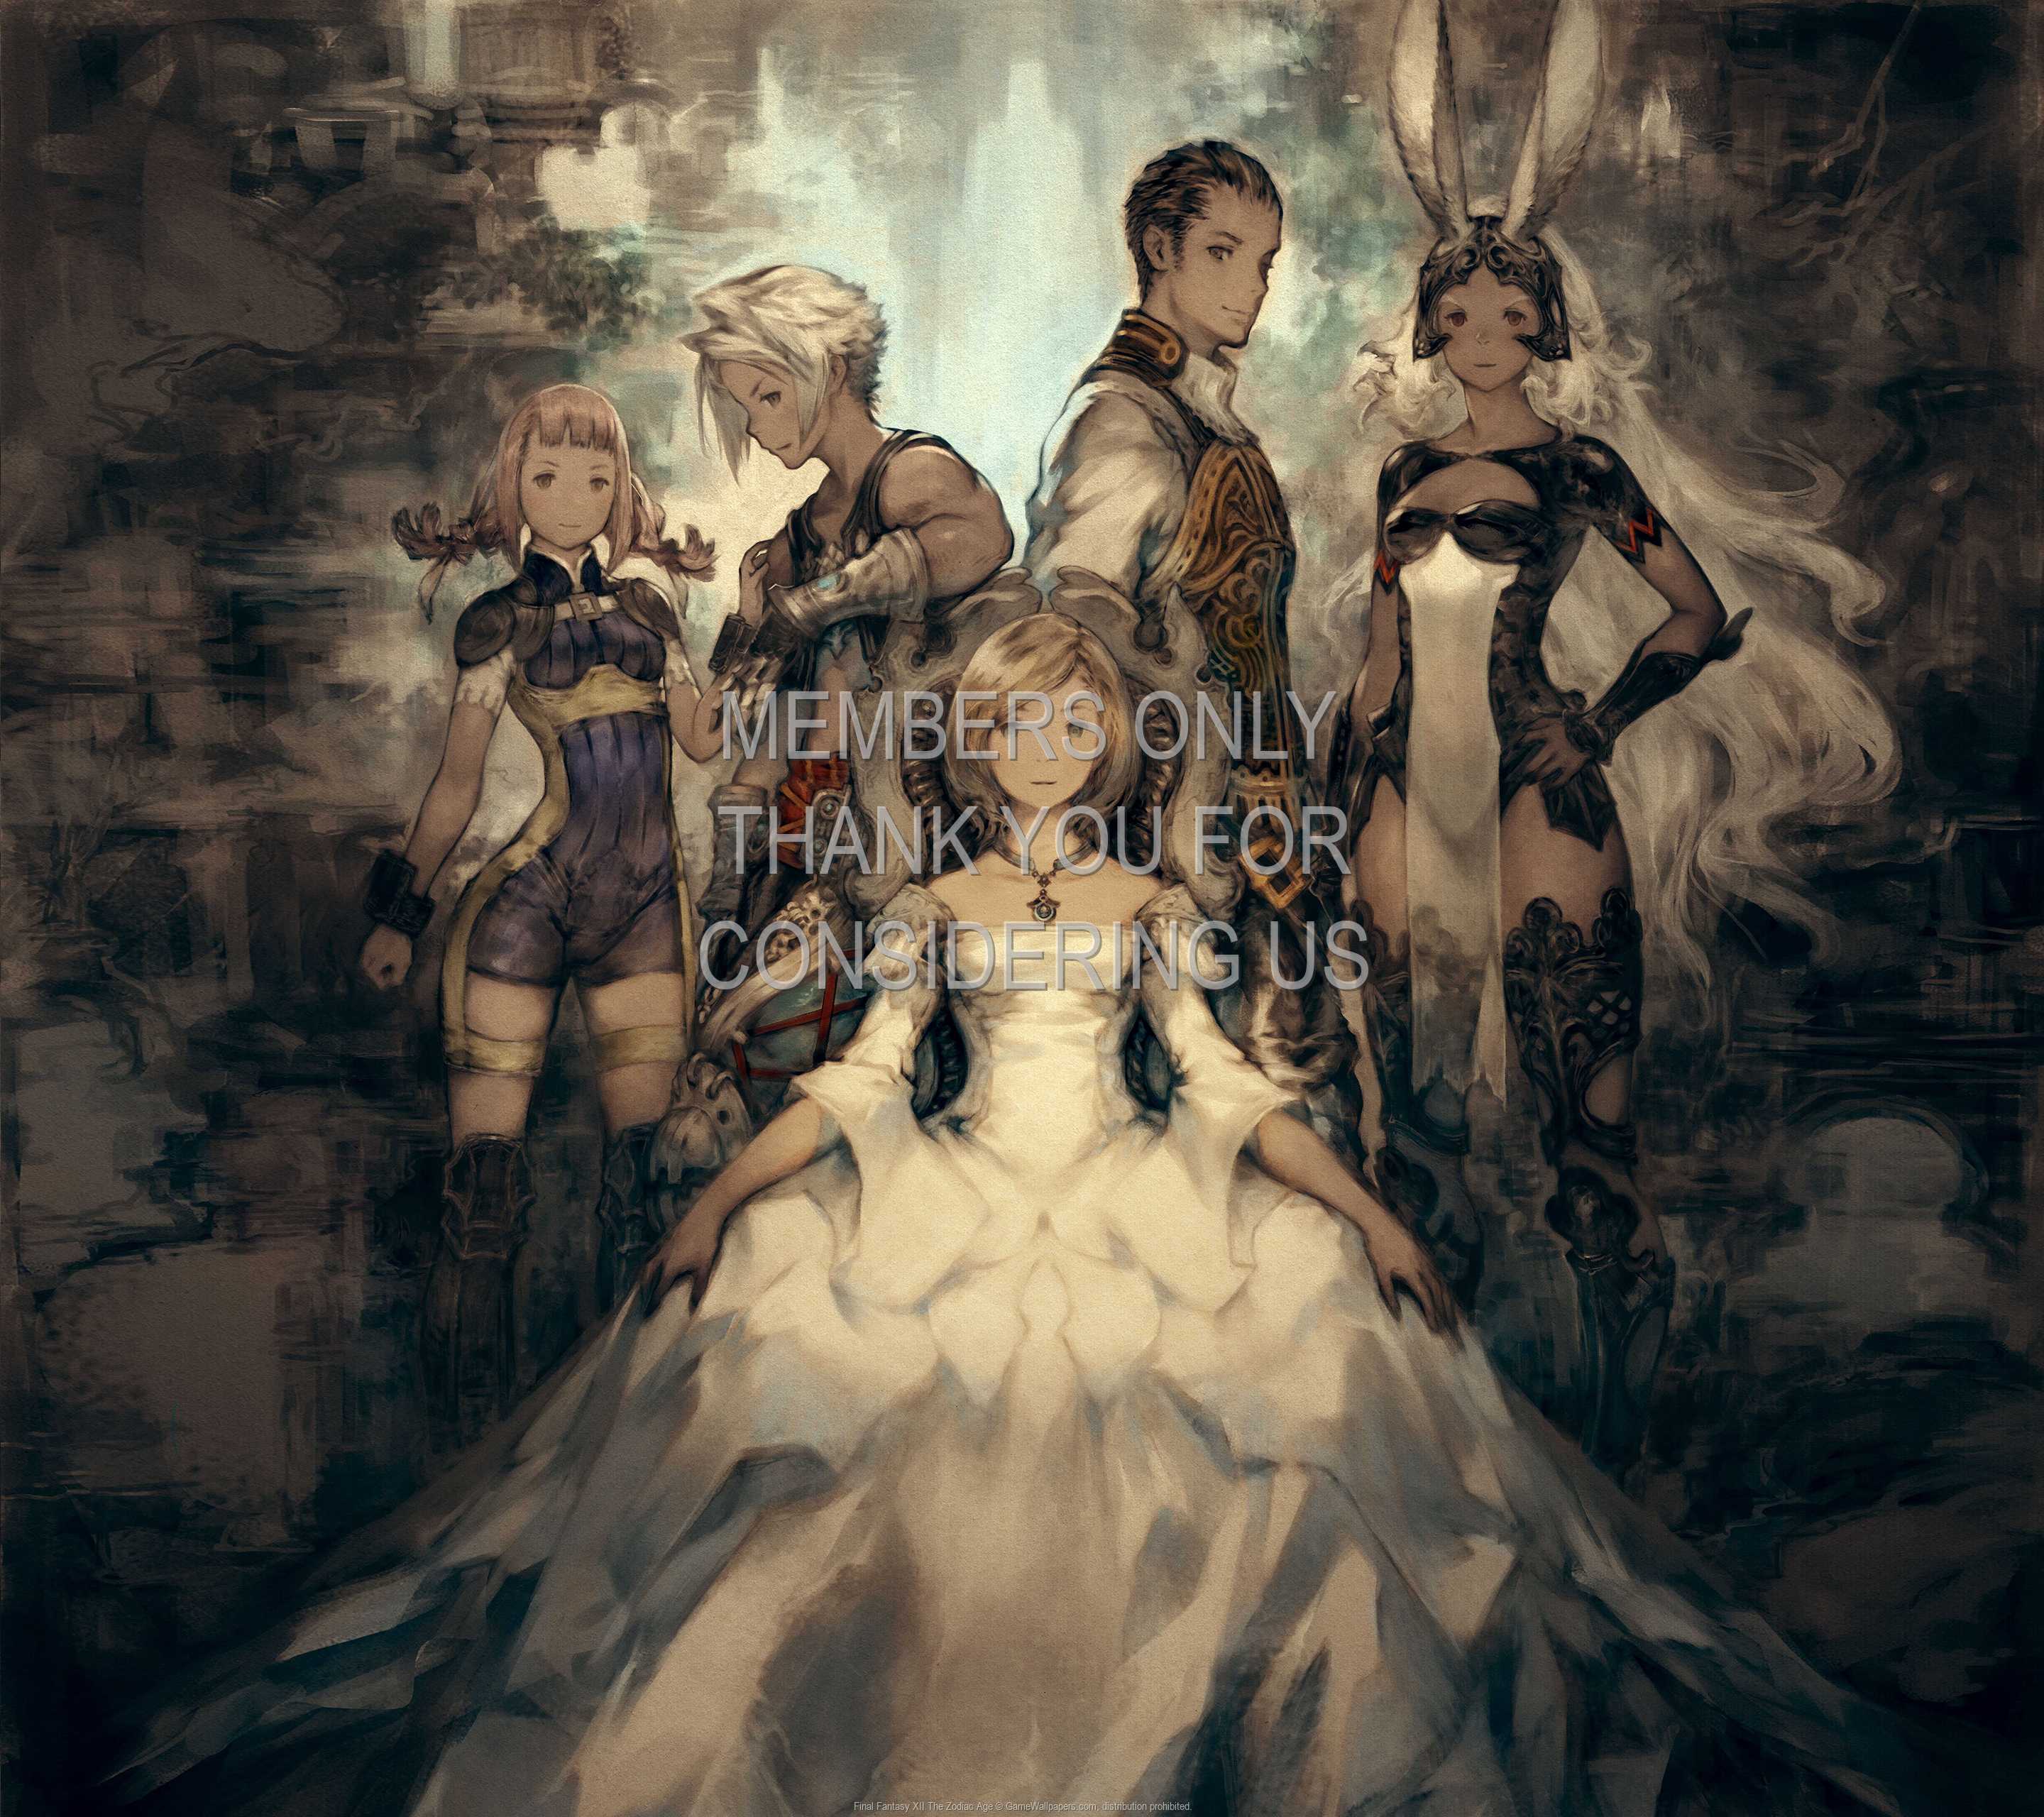 Final Fantasy XII: The Zodiac Age 1440p Horizontal Mobile wallpaper or background 01